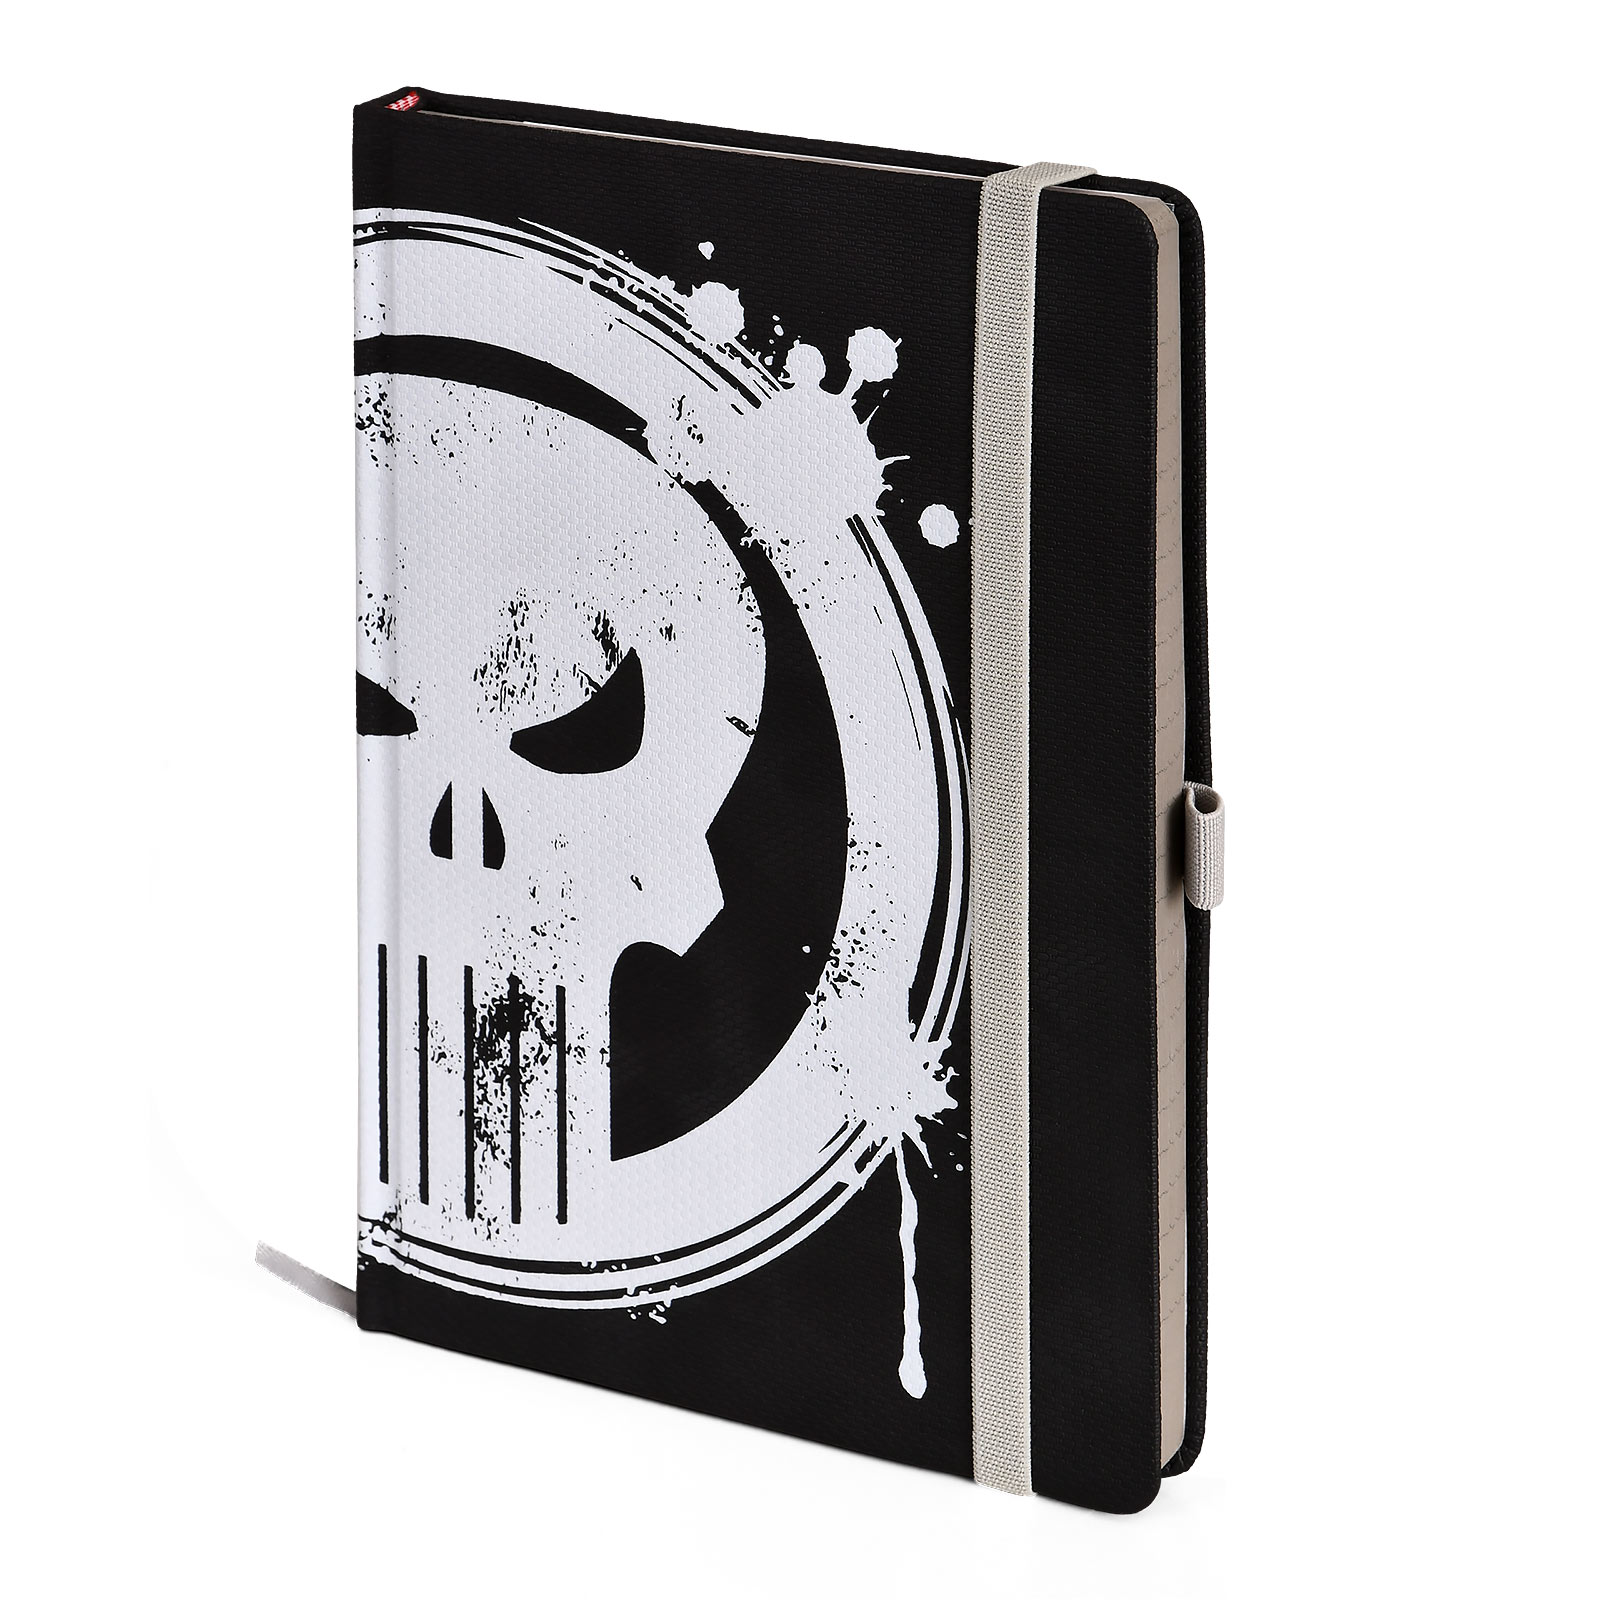 Punisher - Carnet de notes Premium A5 avec logo Skull